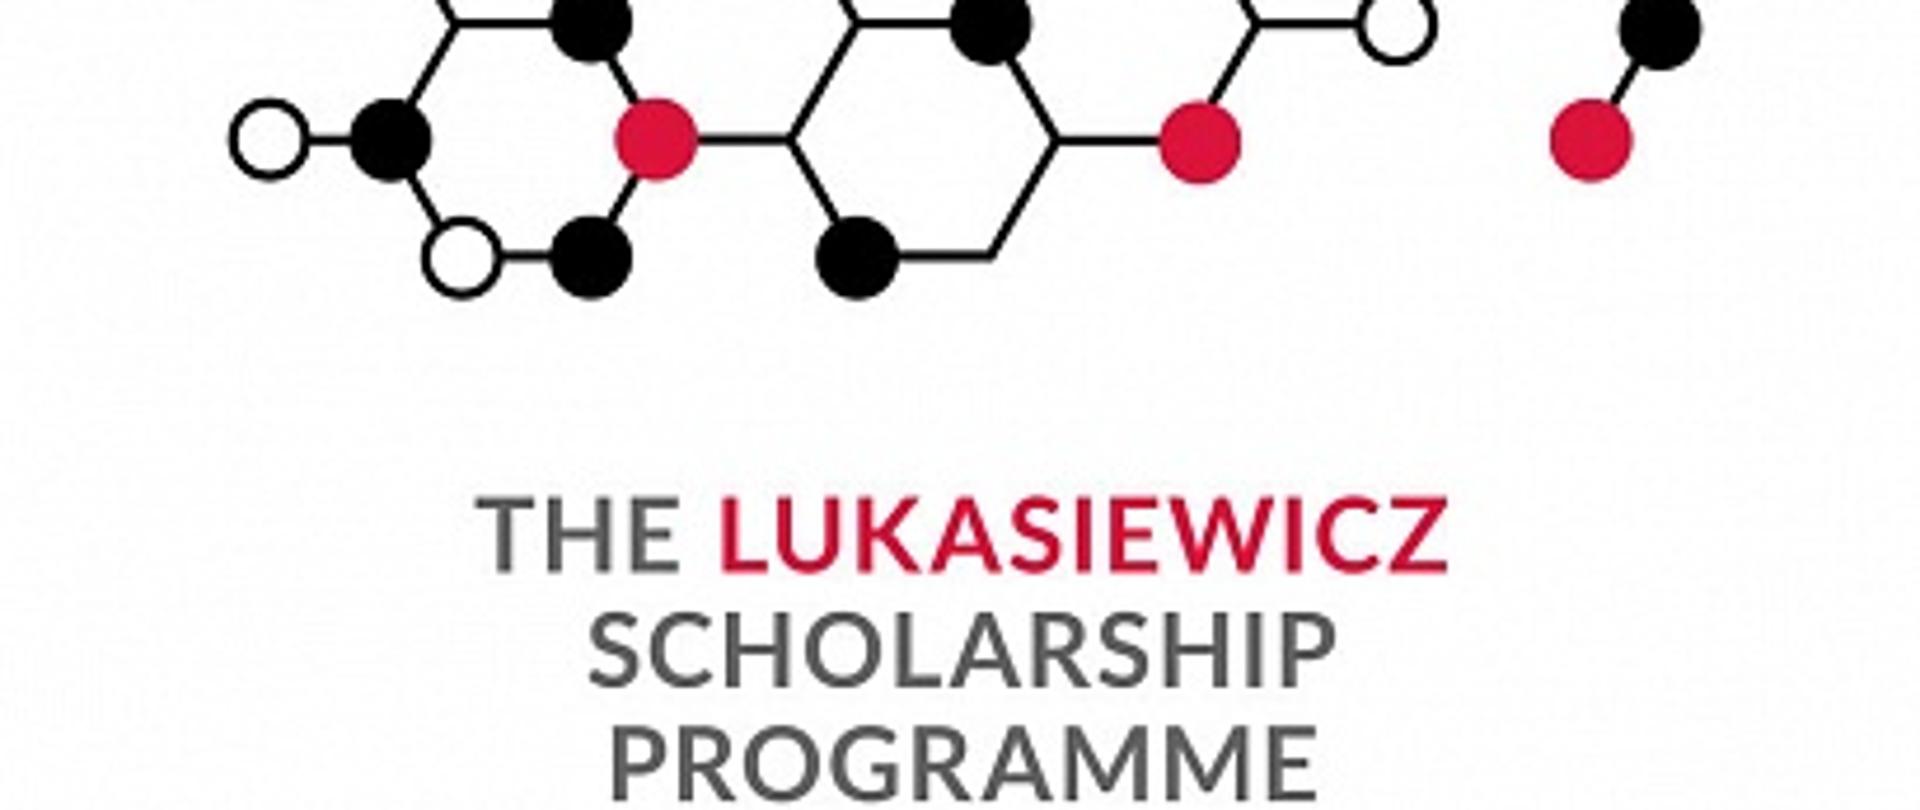 The Lukasiewicz Scholarship Programme logo